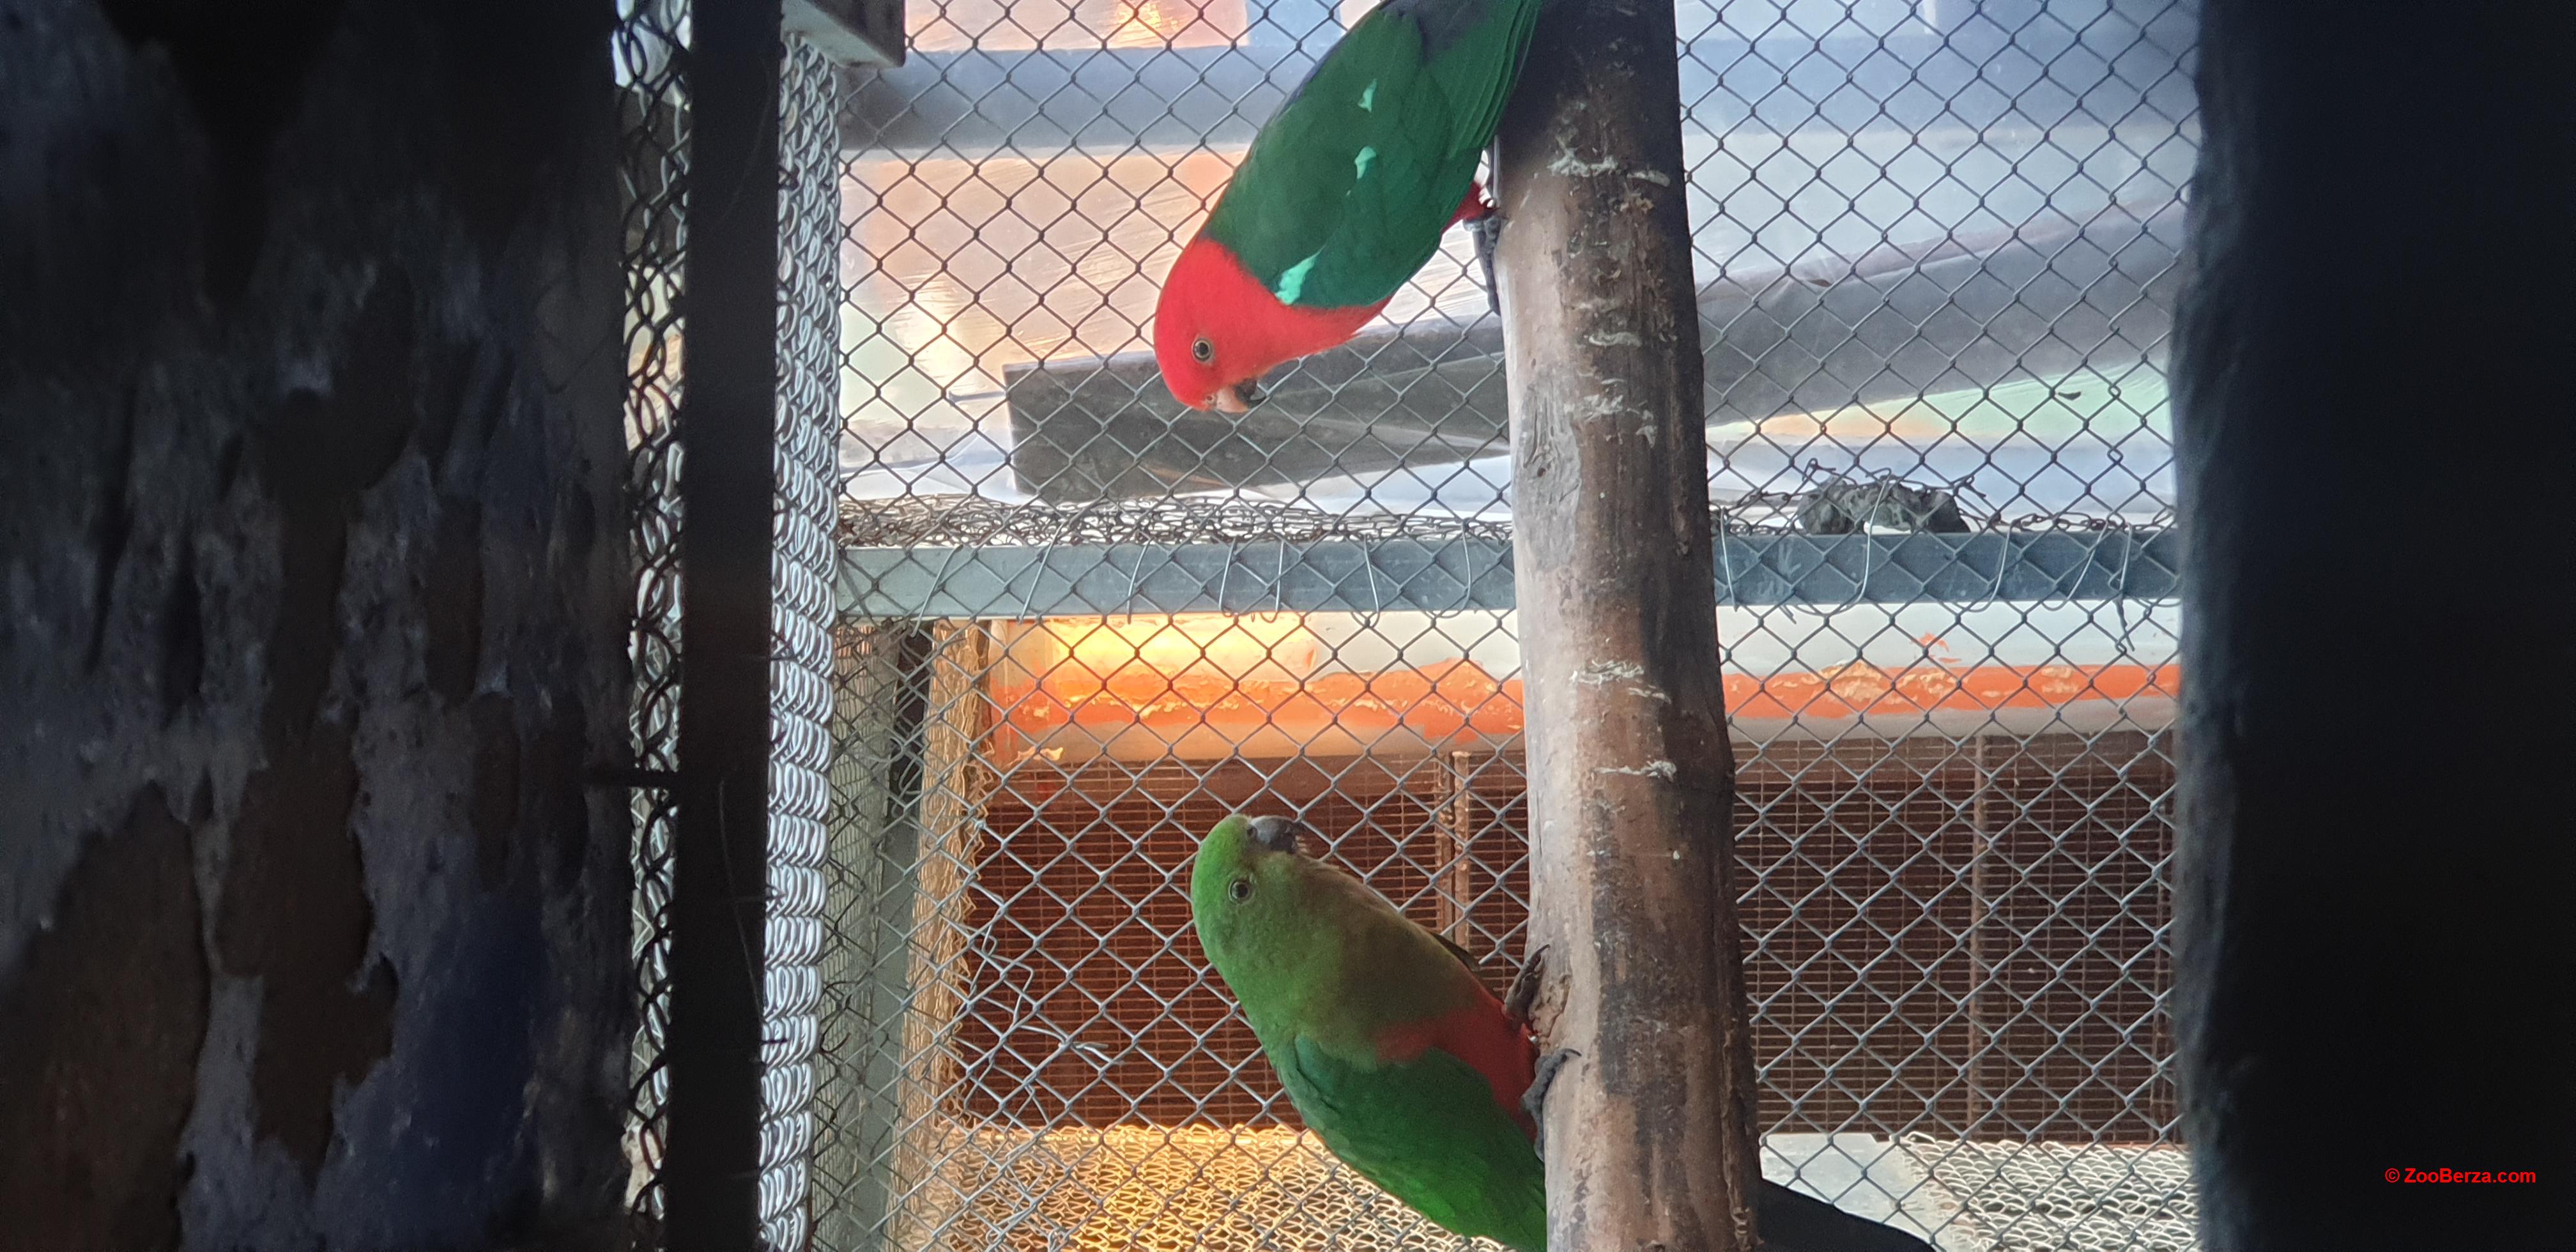 kraljevski papagaji